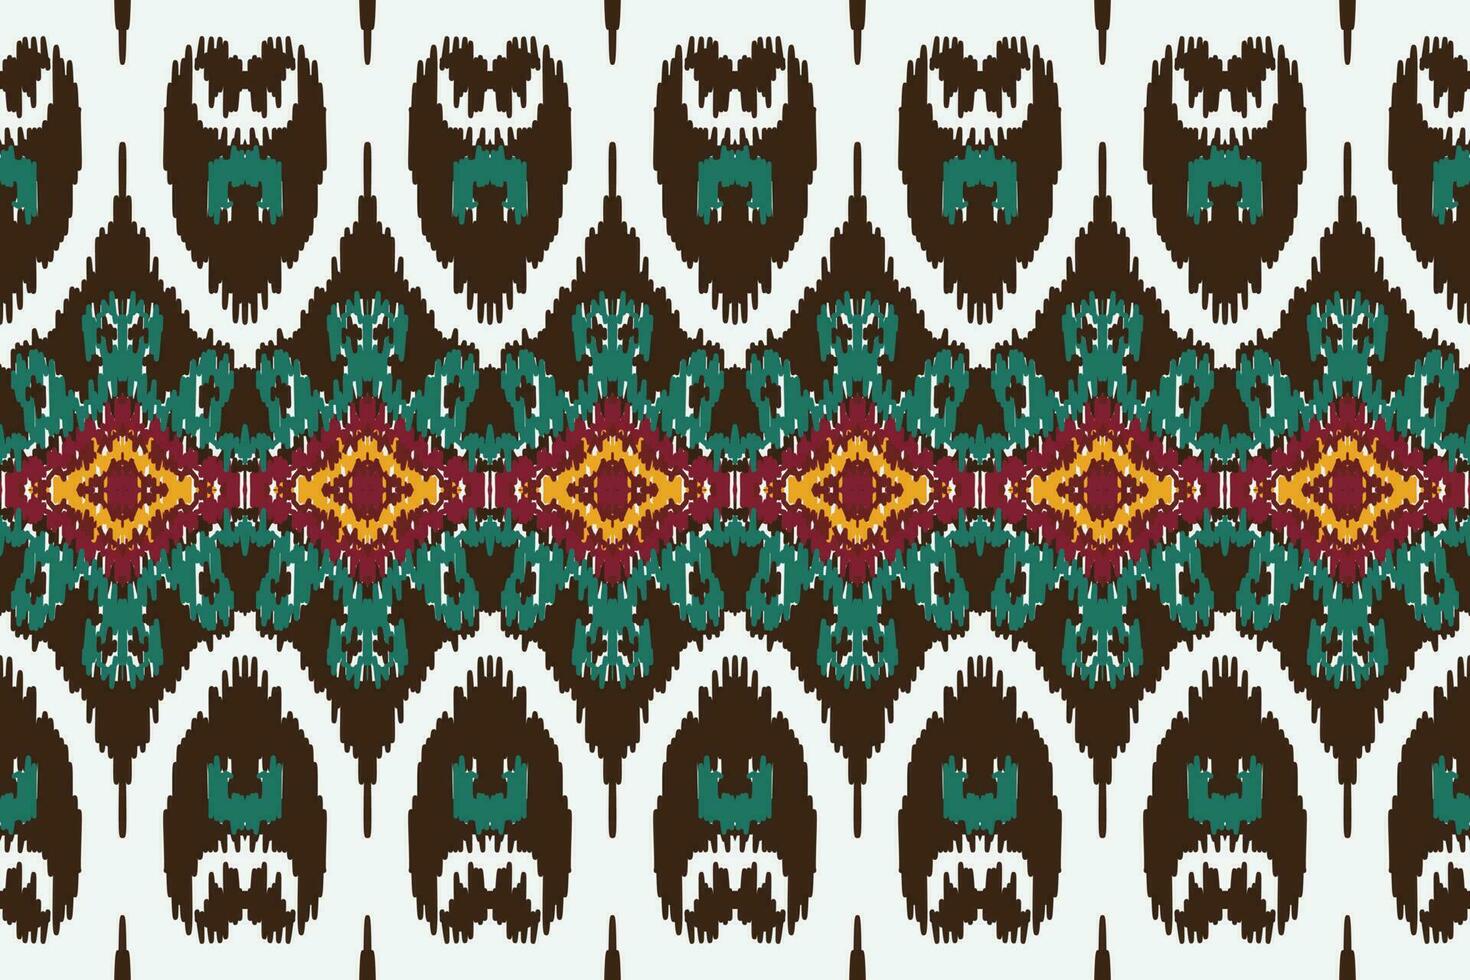 africano ikat paisley padronizar bordado fundo. geométrico étnico oriental padronizar tradicional. ikat asteca estilo abstrato vetor ilustração. Projeto para impressão textura, tecido, saree, sari, tapete.